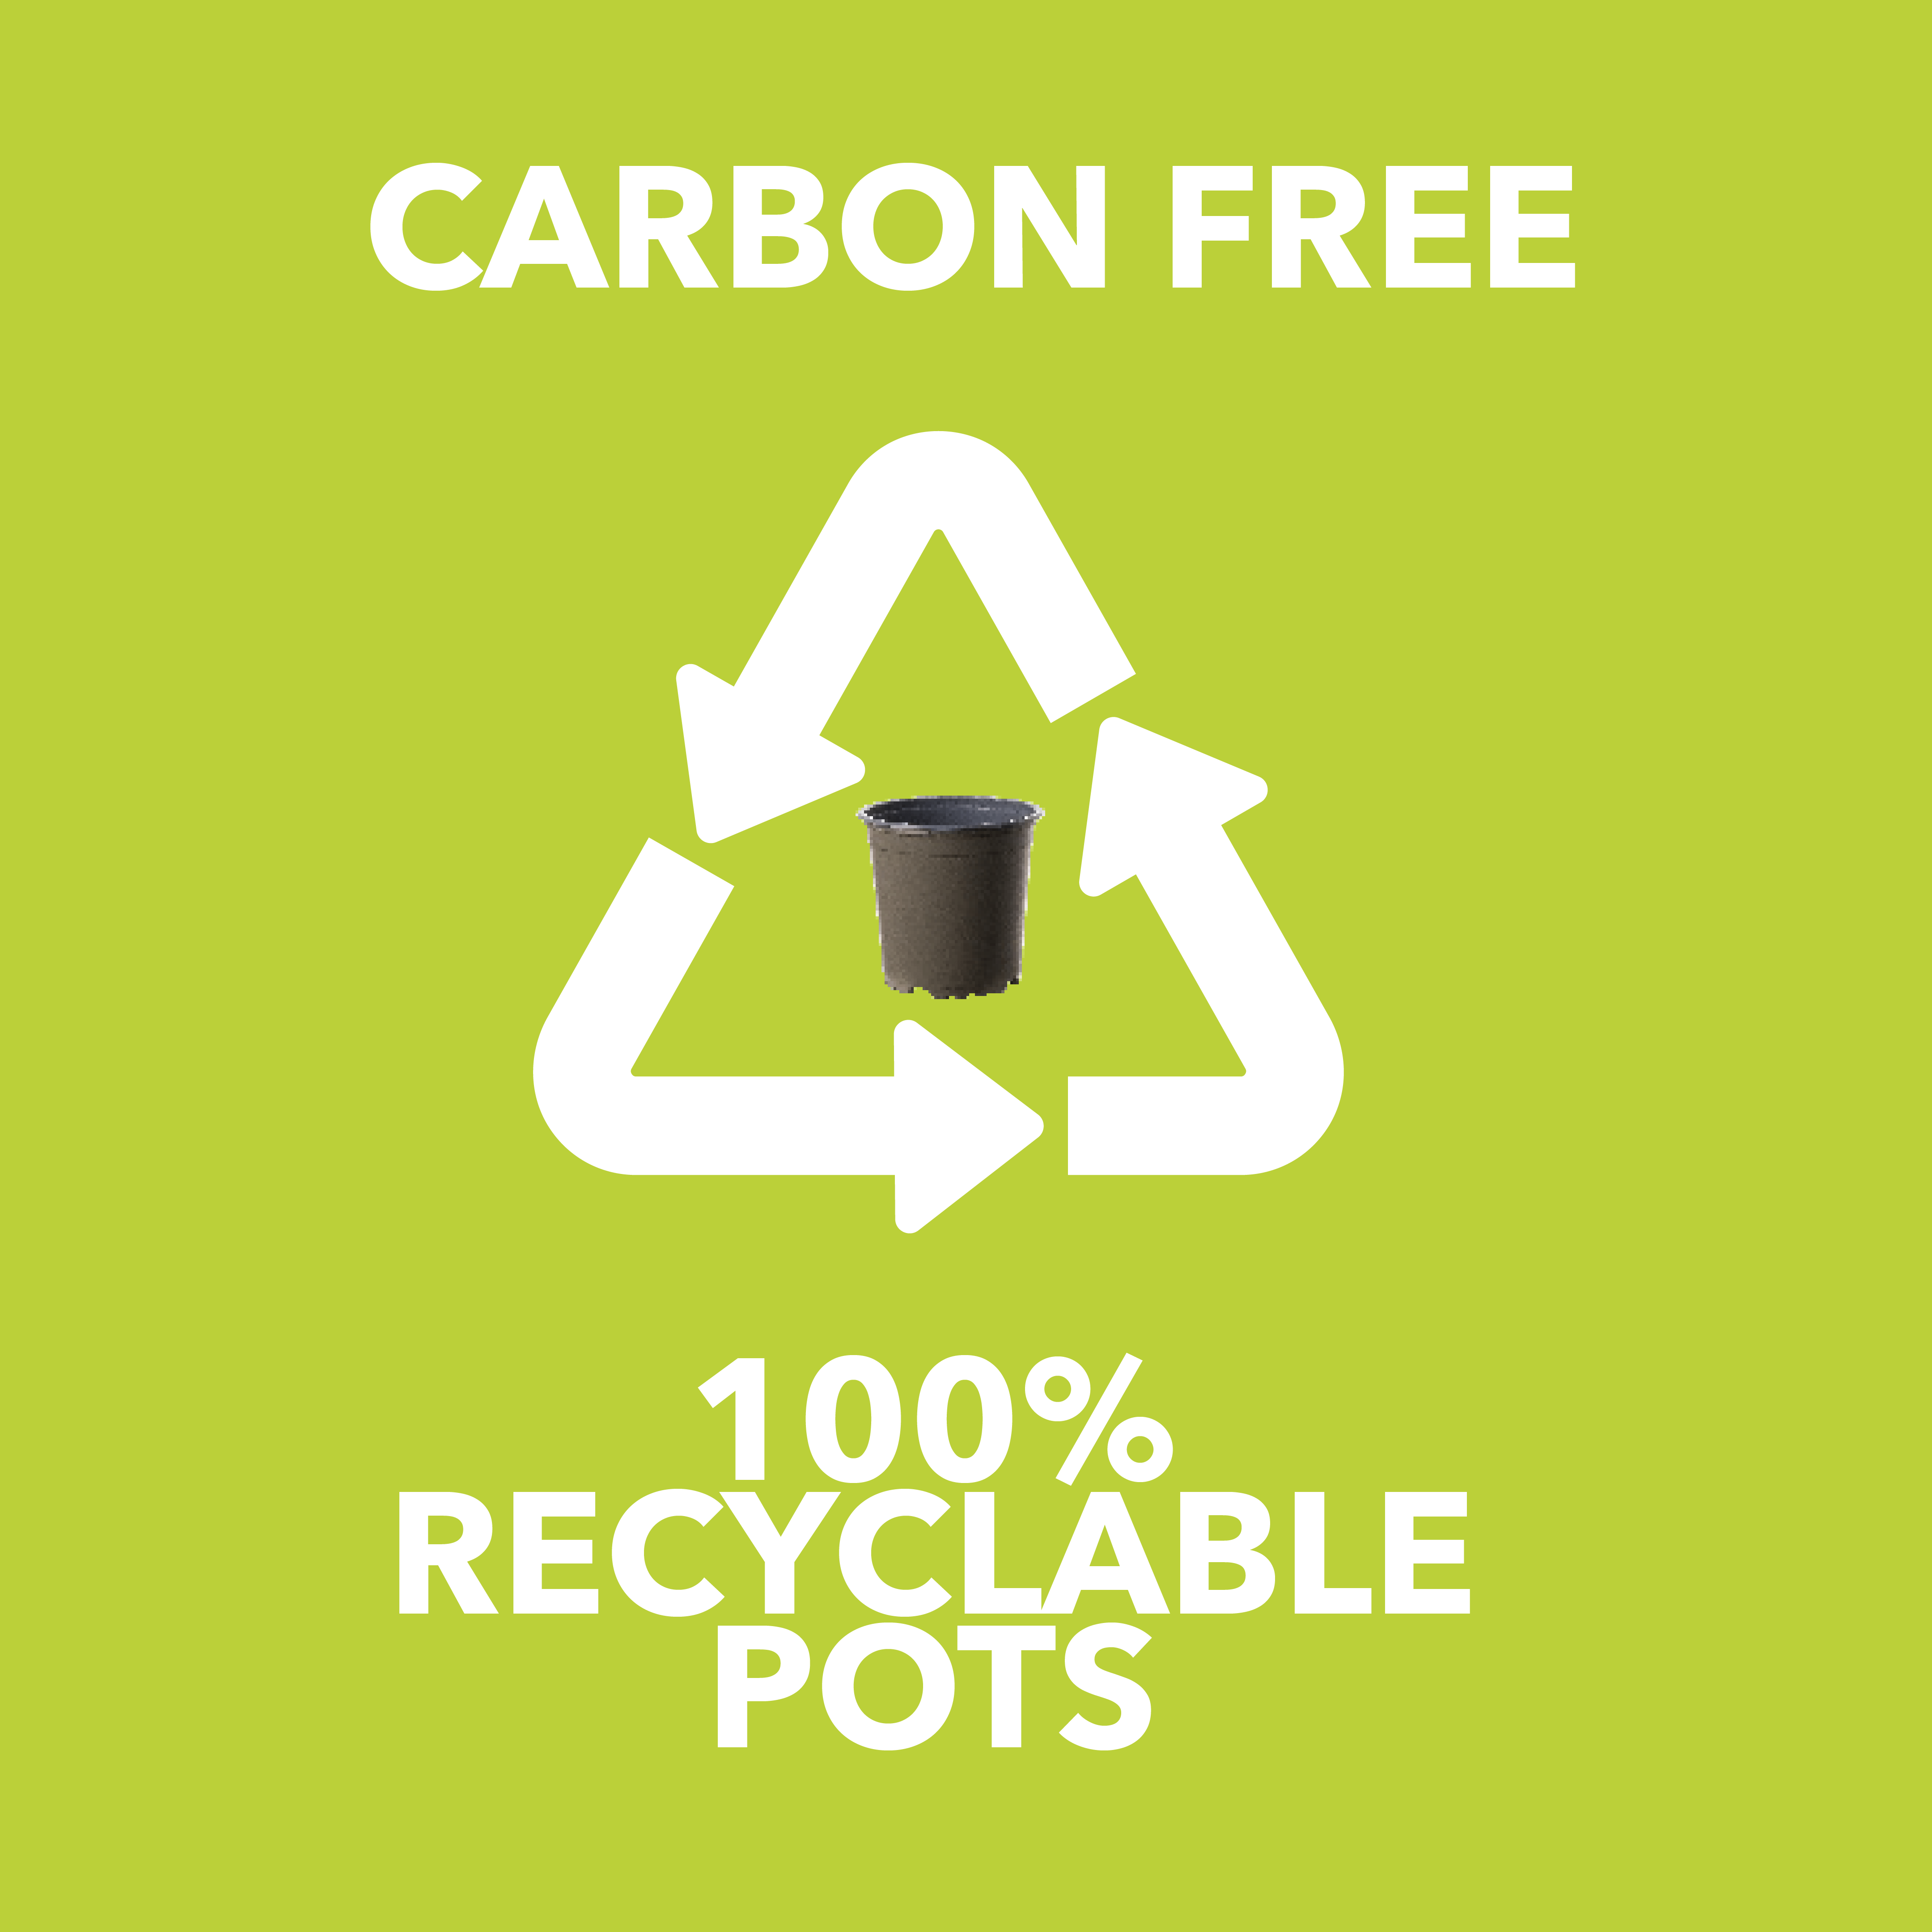 vasi 100% riciclabili senza carbonfossile